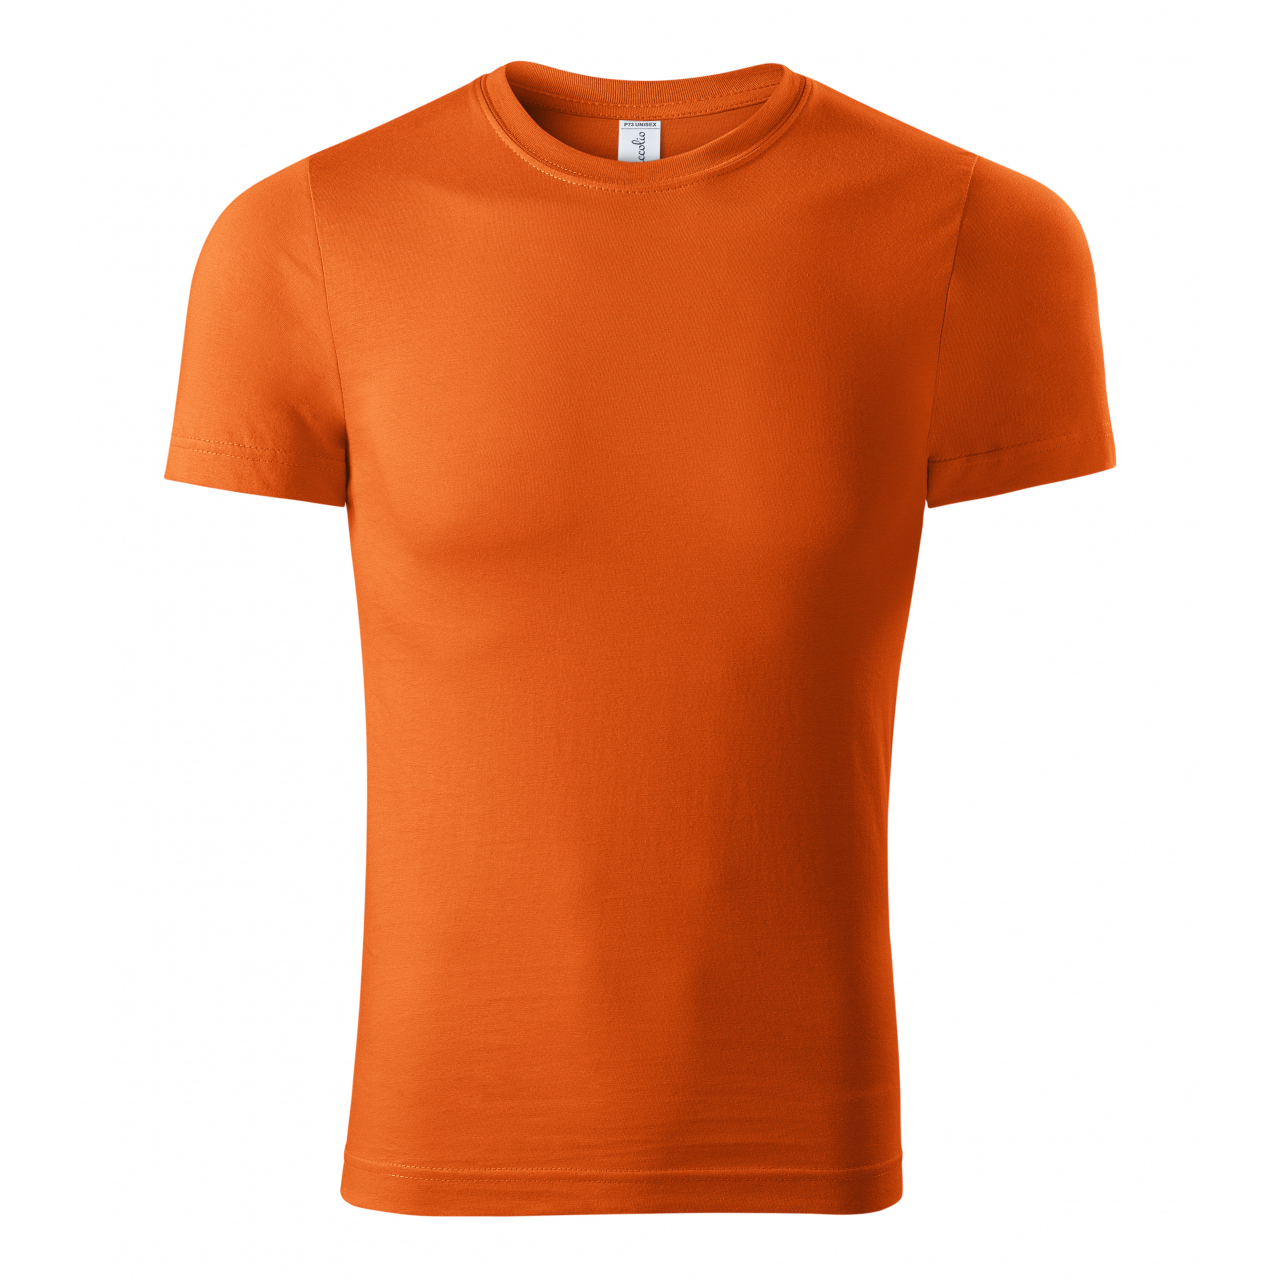 Tričko unisex Piccolio Paint - oranžové, XL